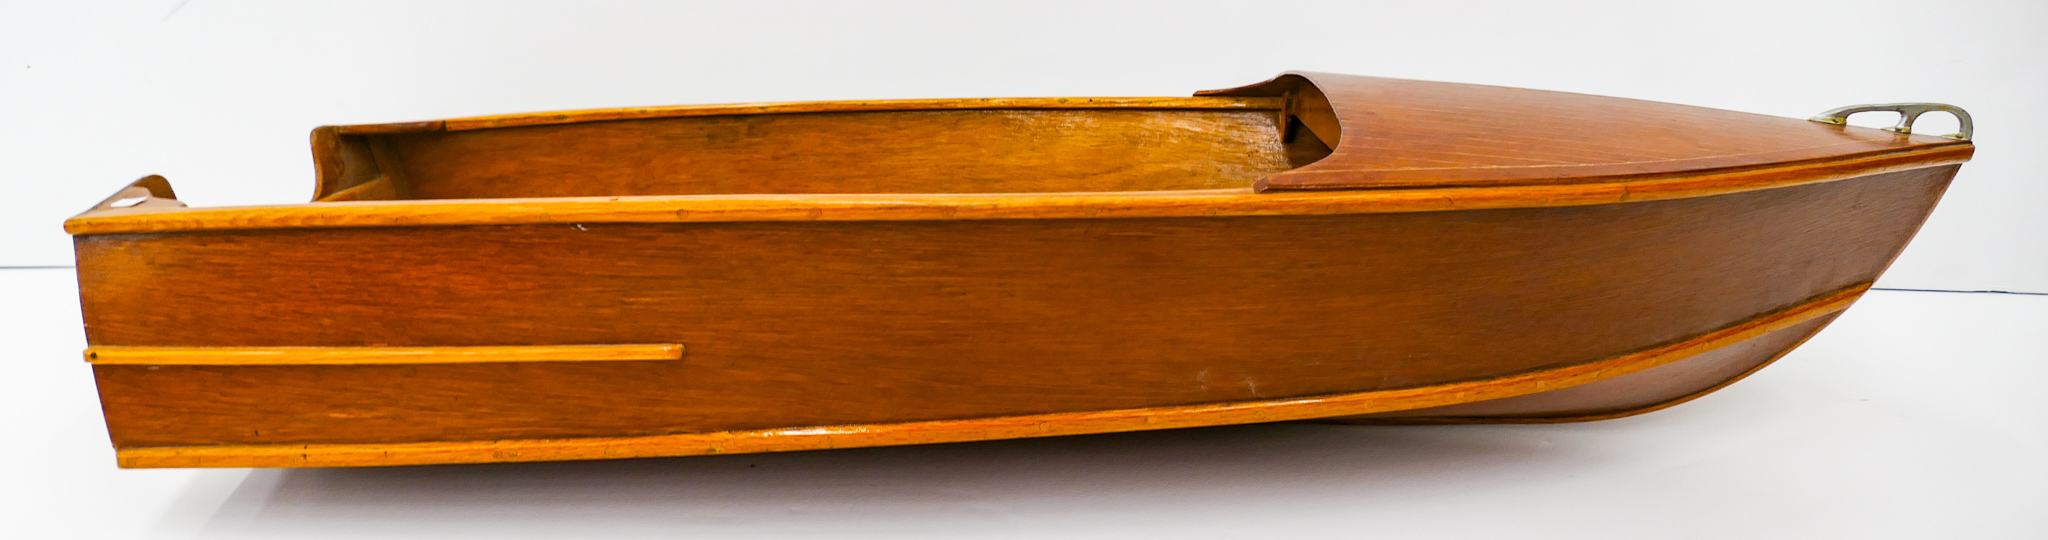 Large Wood Speedboat Model 41